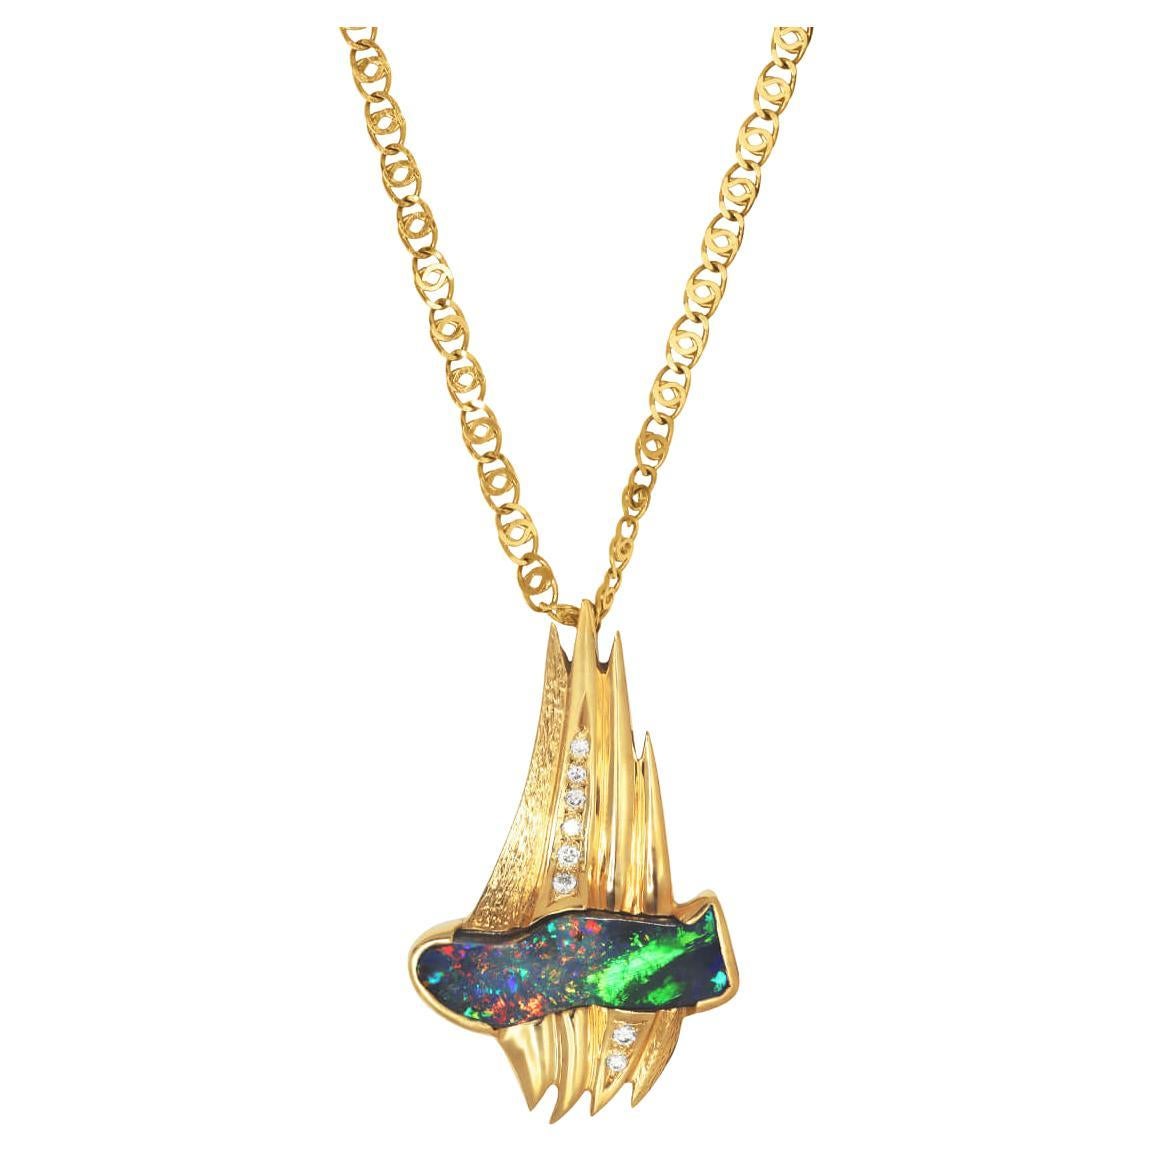 5.82ct Black Boulder Opal, Diamond & 18K Gold Necklace